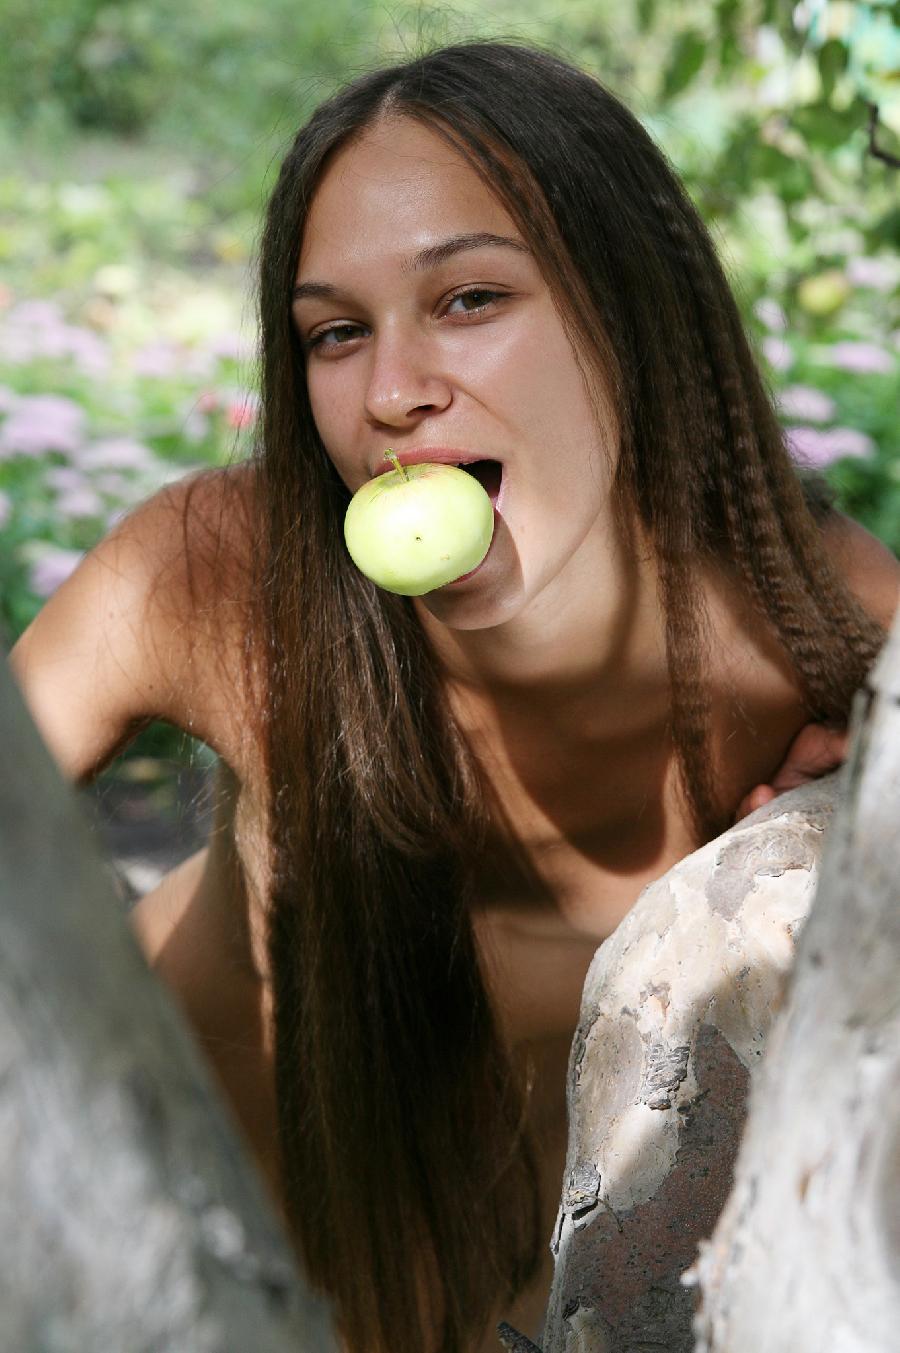 I like apples - Freya A - 10